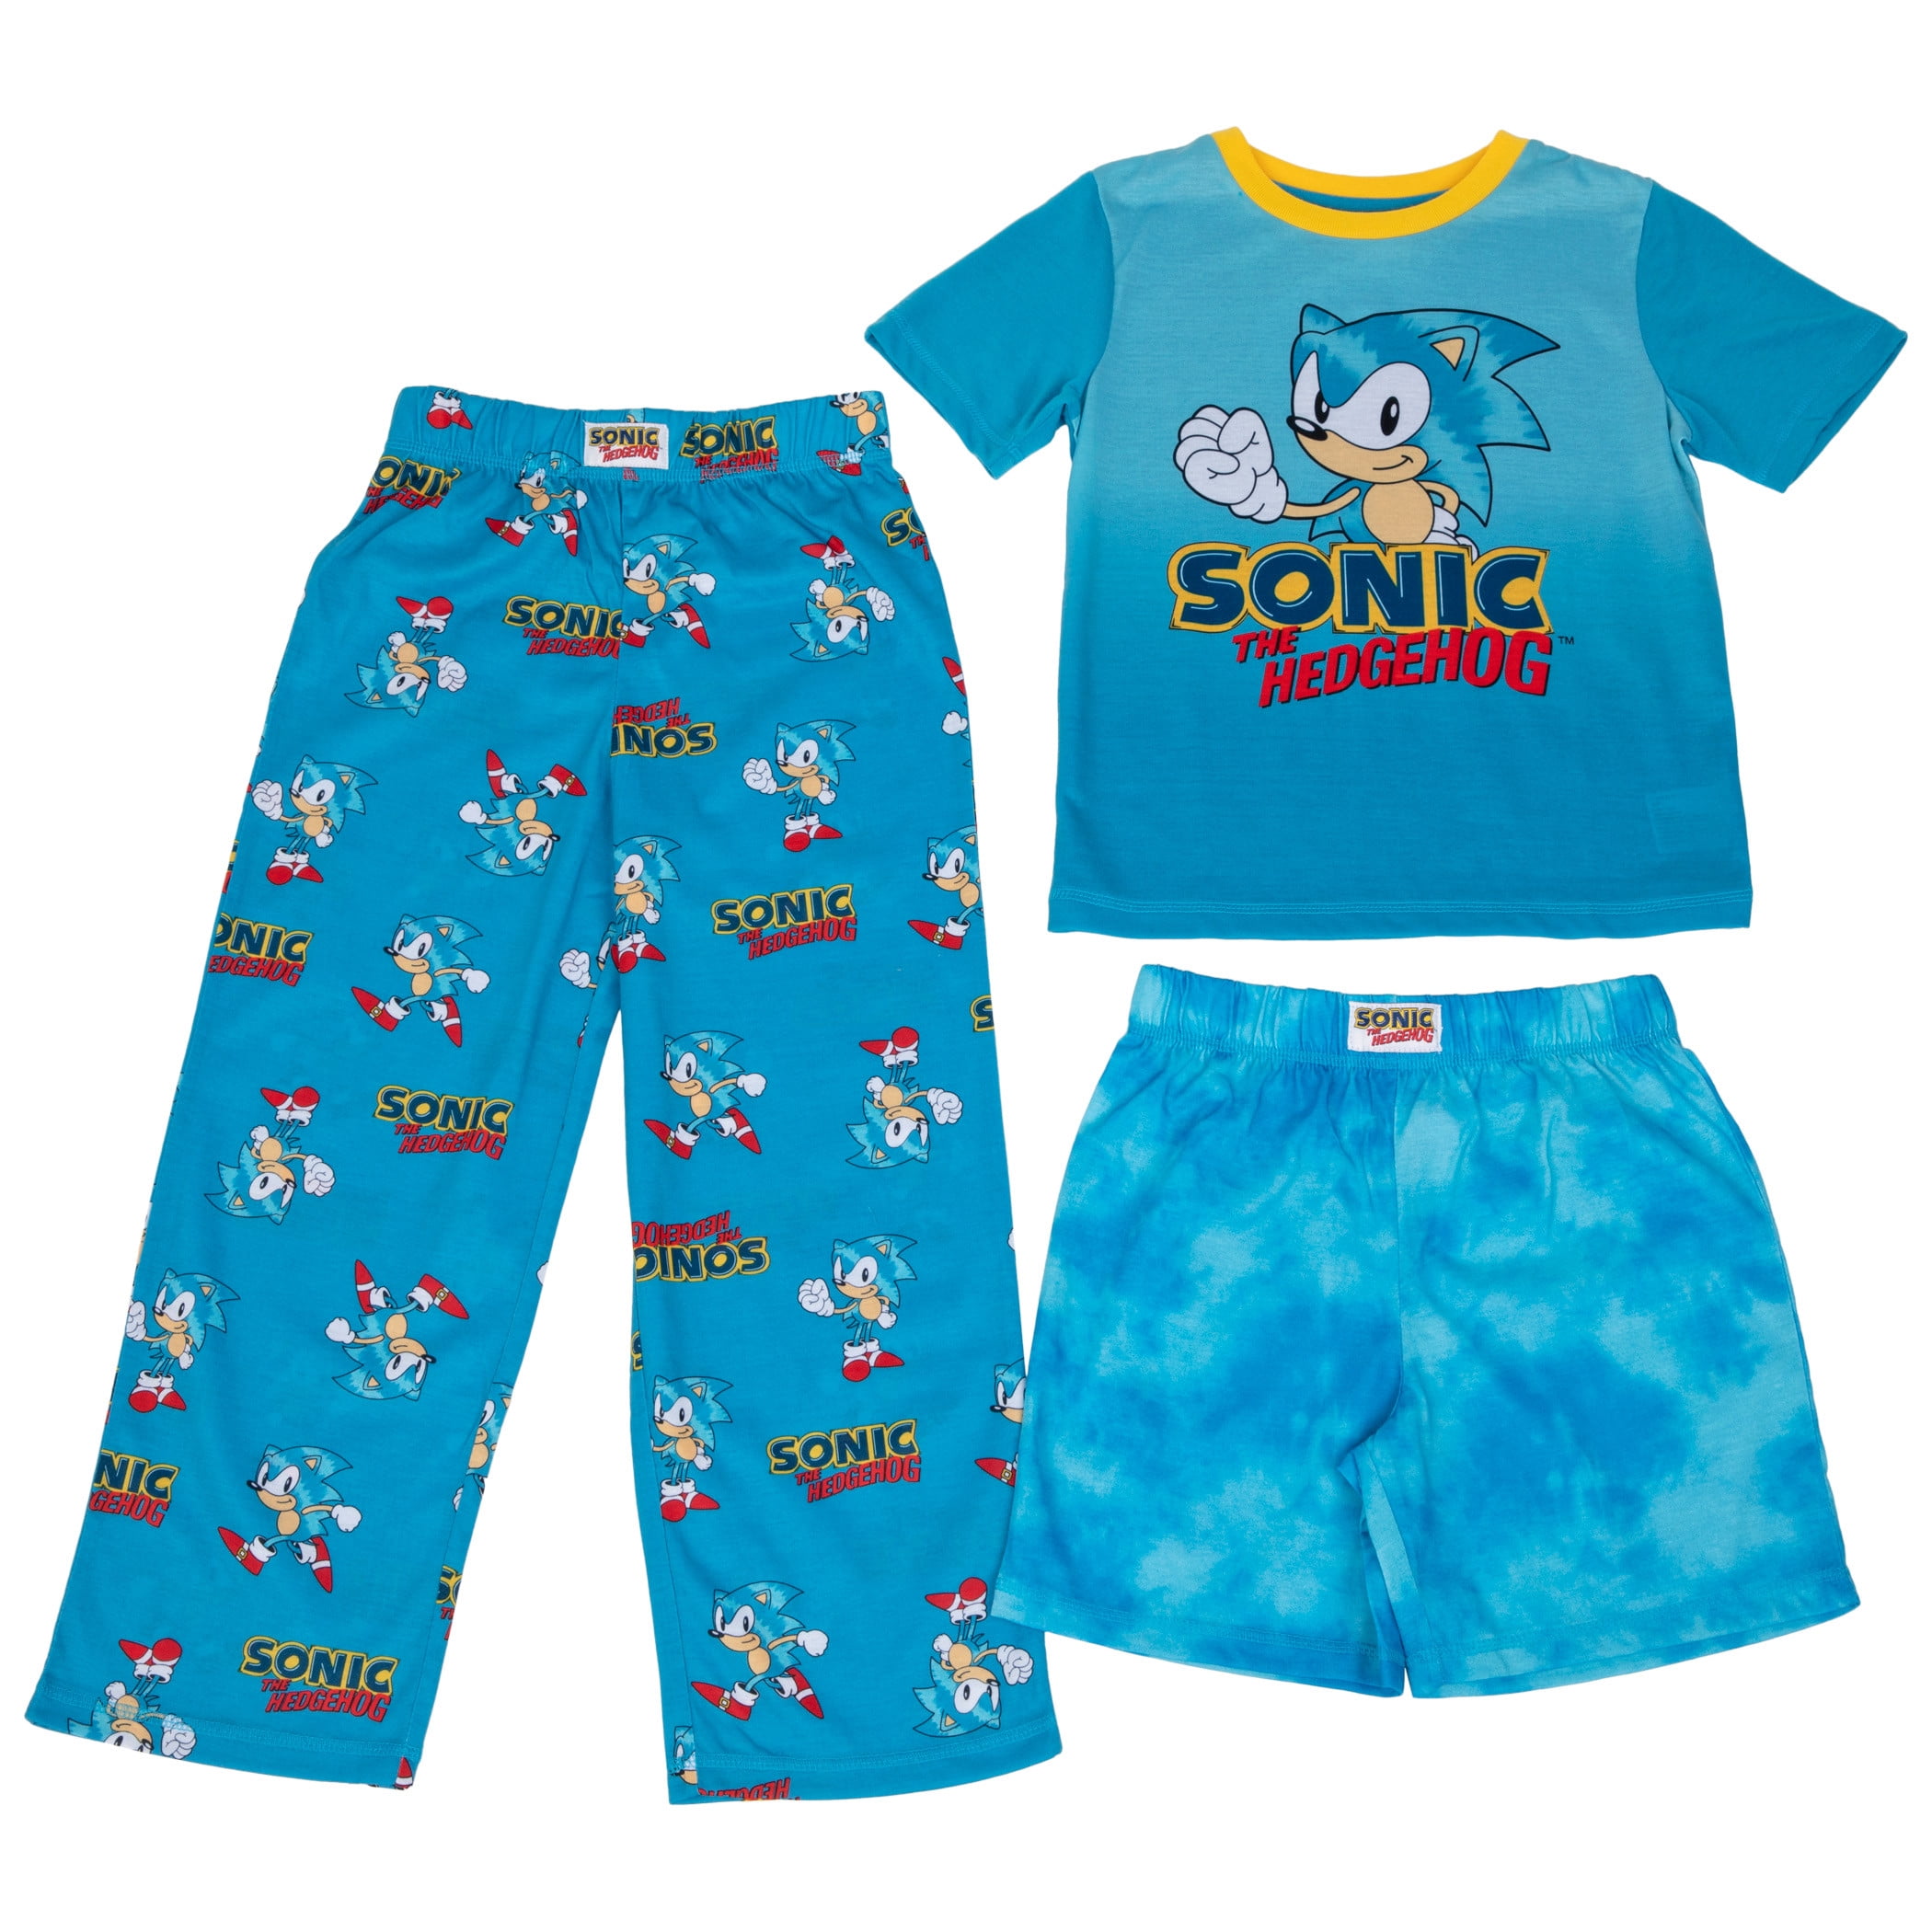 Sonic The Hedgehog Pajamas Size 6-7 Small Boy 3 Piece Set Shirt,Pants,Shorts NEW 